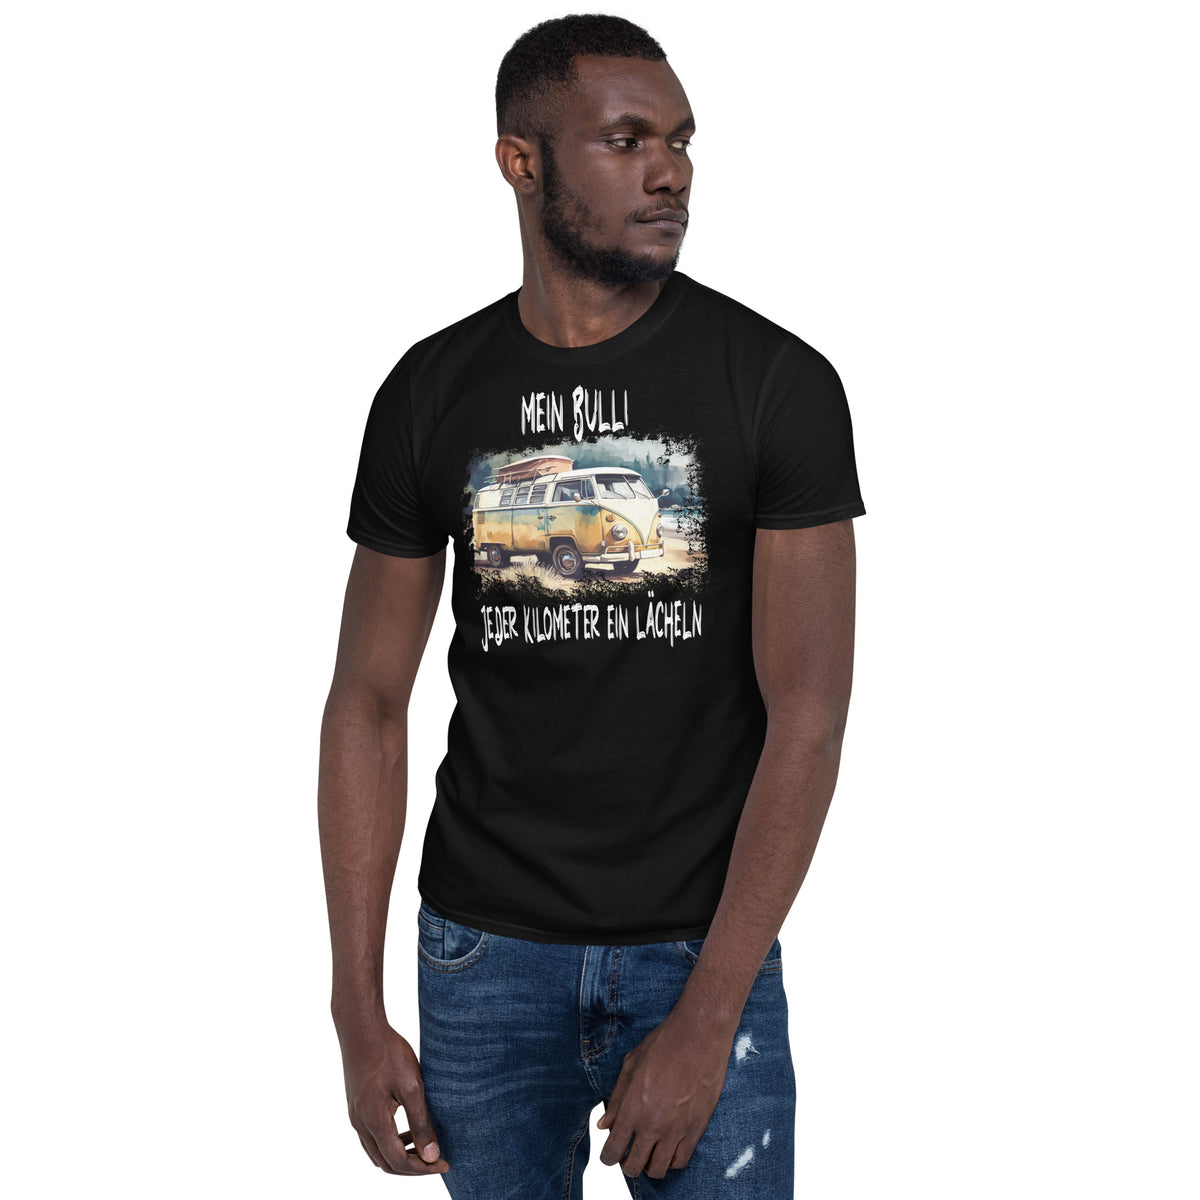 T-Shirt Van-Life Motiv "Mein Bulli Jeder Kilometer ein lächeln" Variante 3